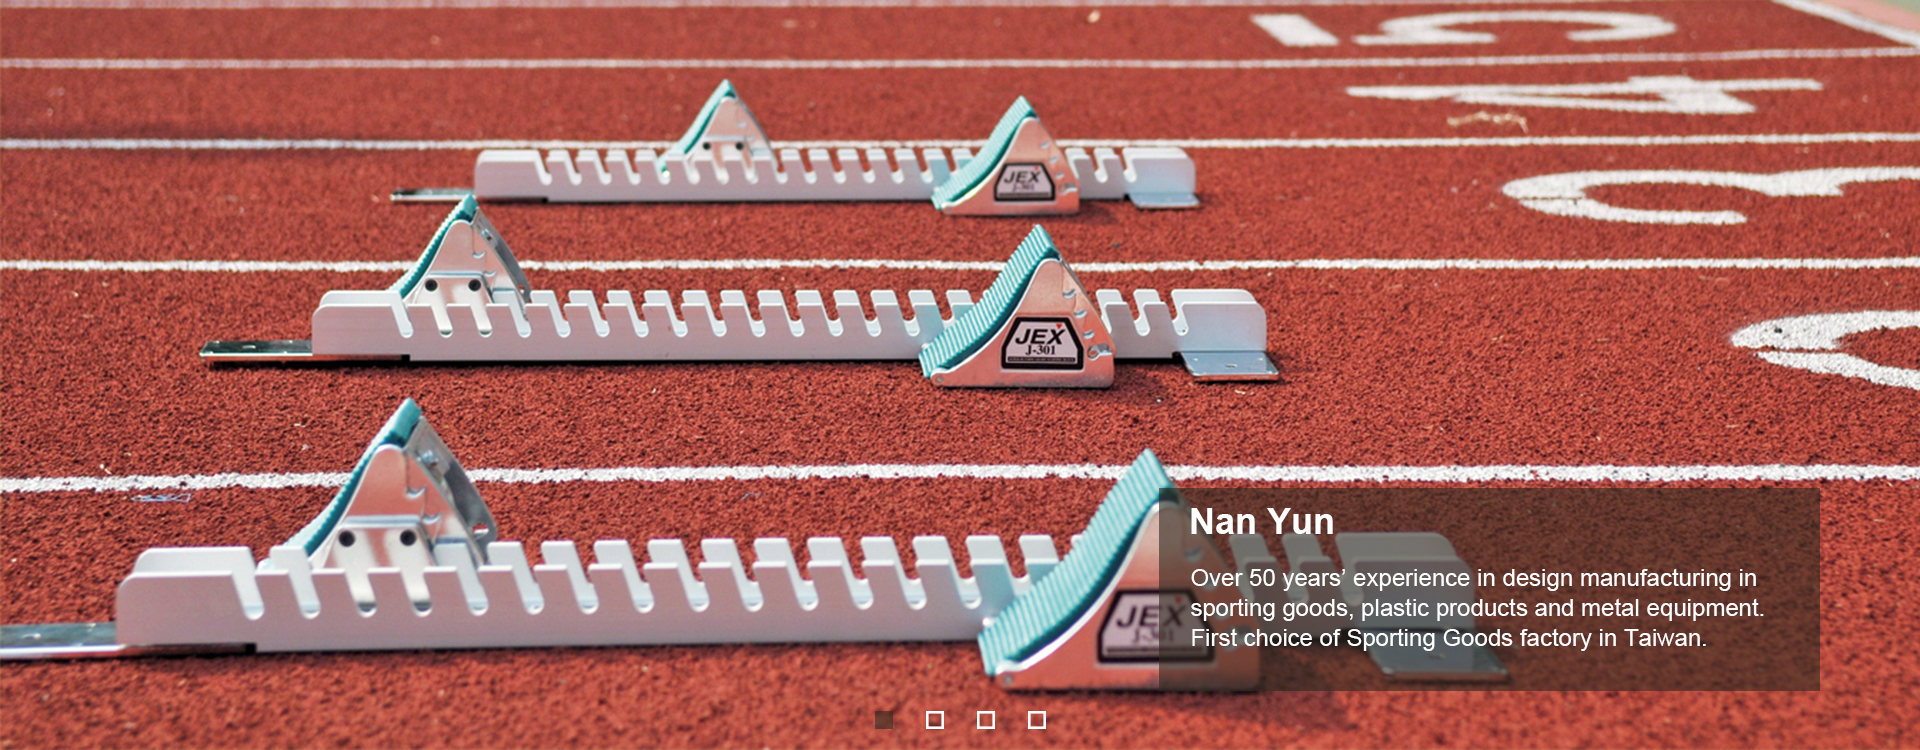 Nylon Shuttlecocks, Track & Field Equipment - Nan Yun Sporting 